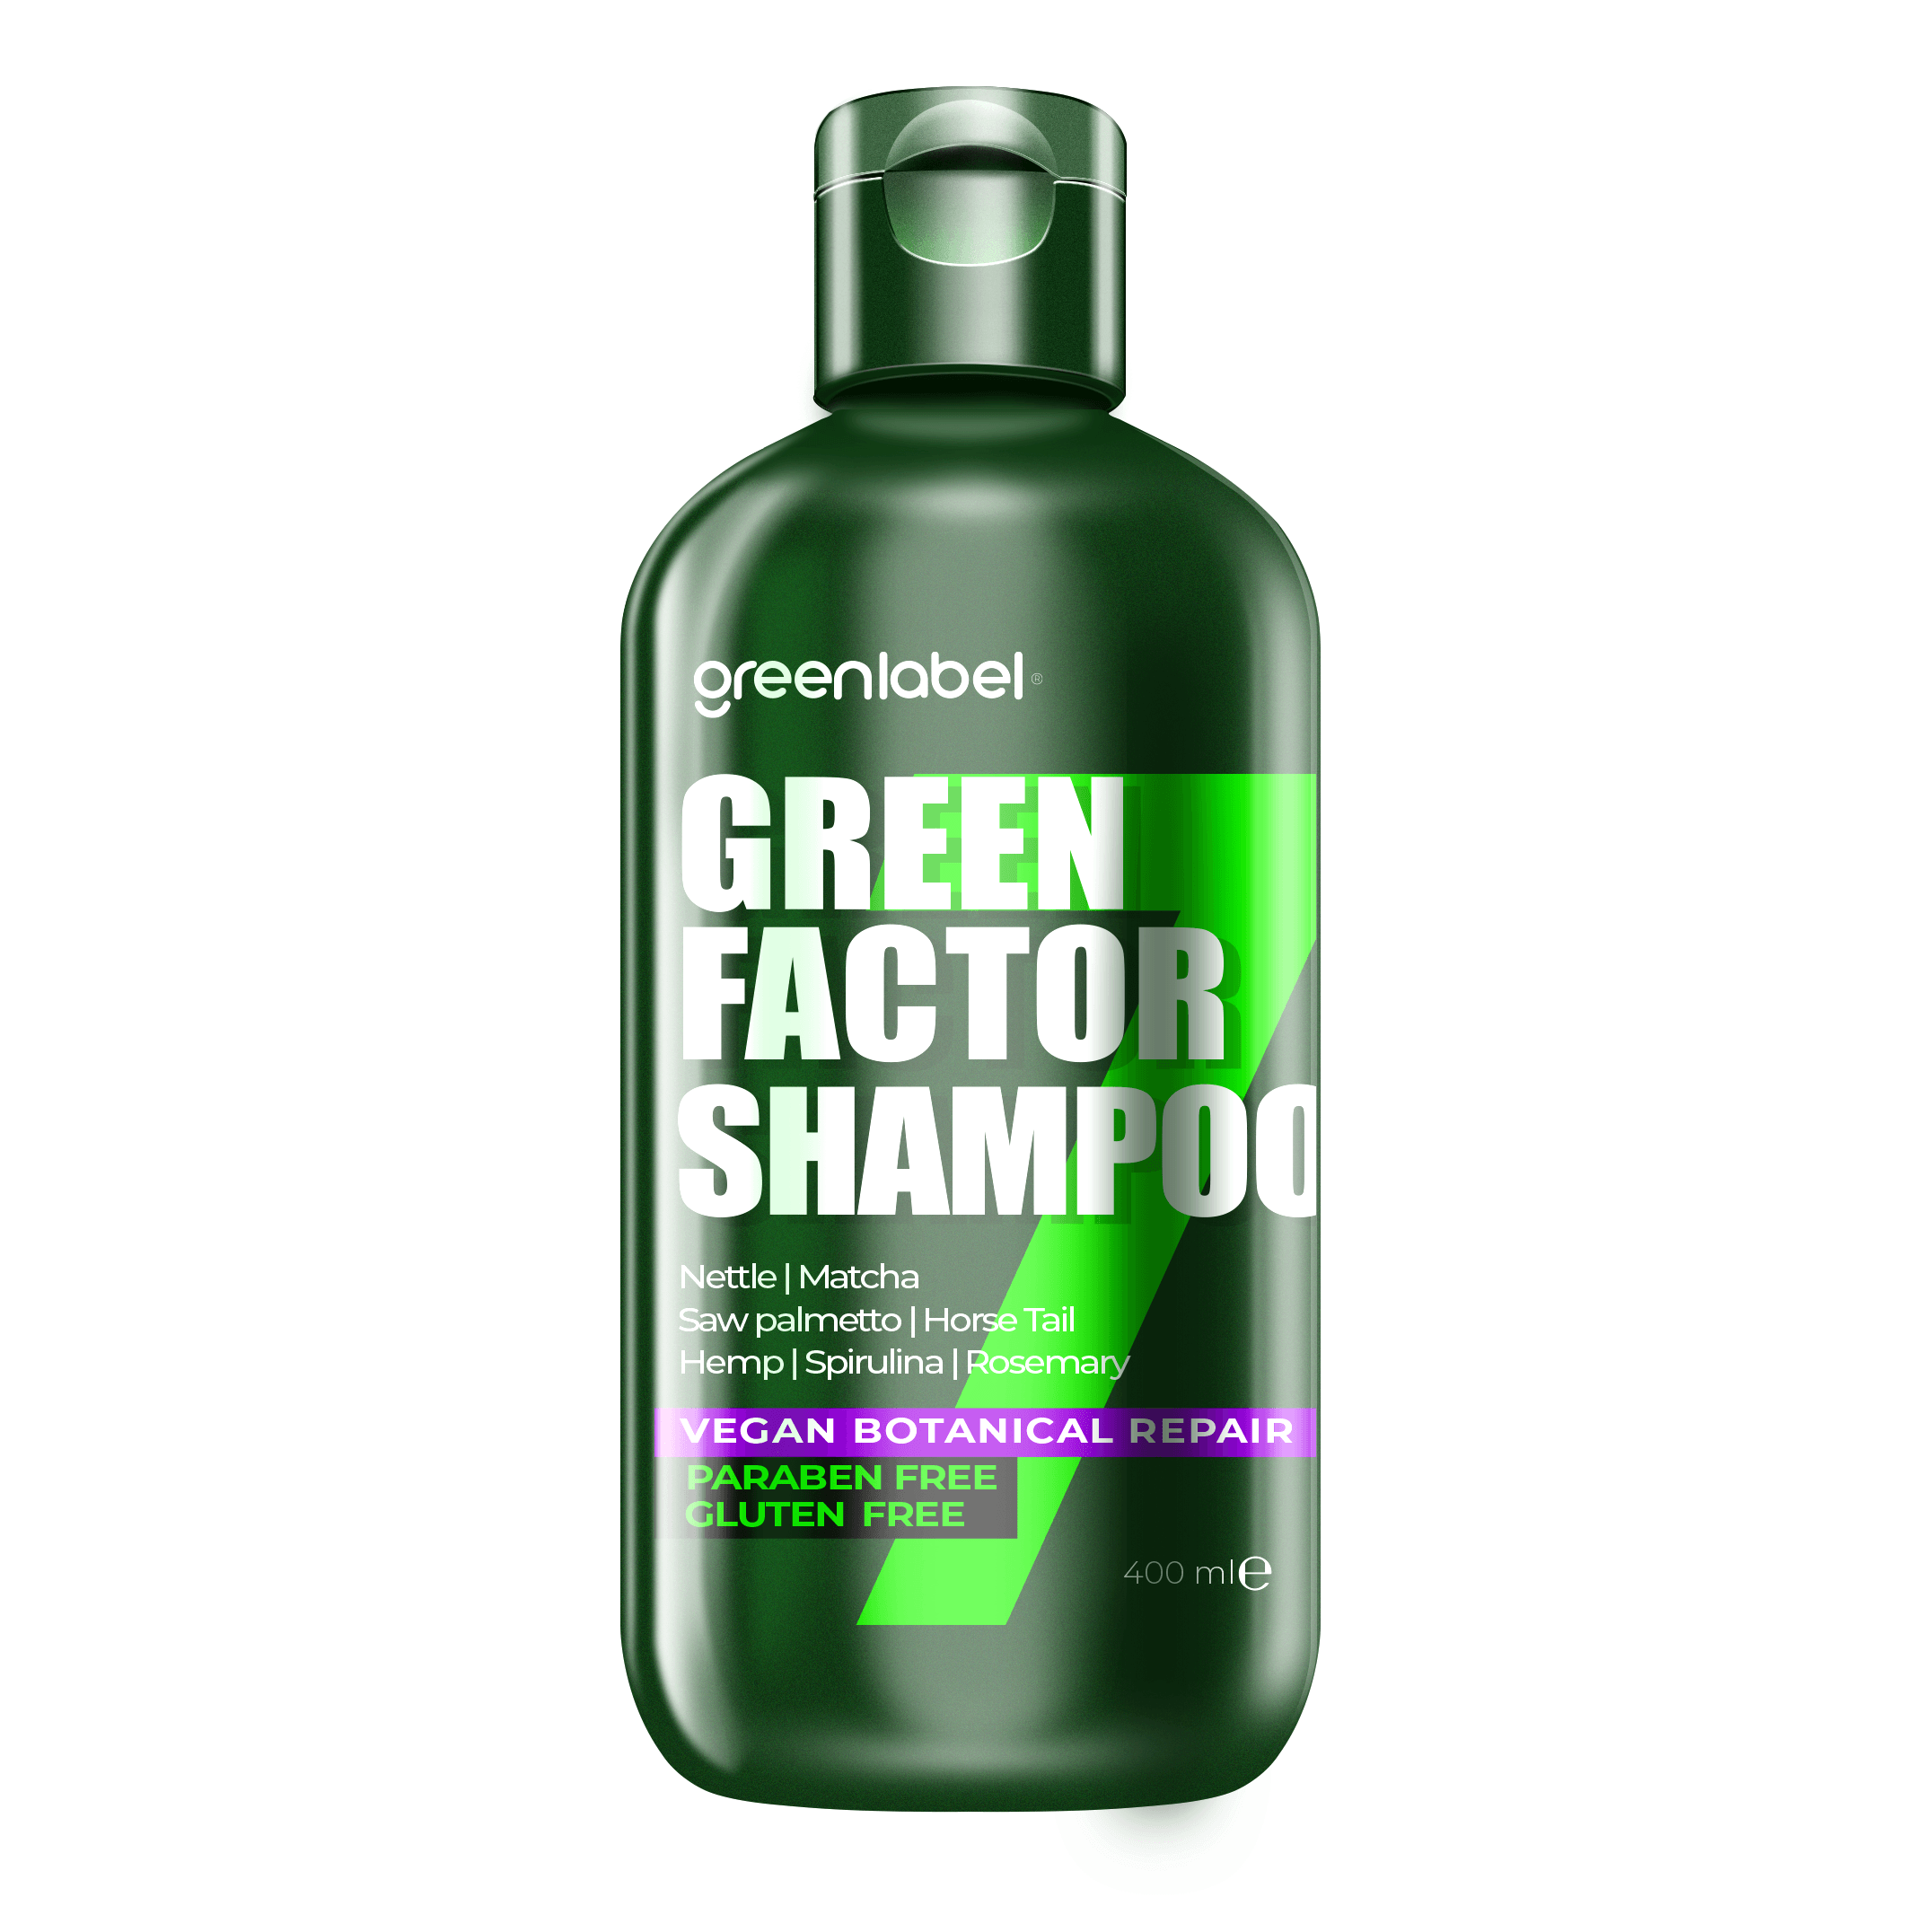 Green Factor 7 Herbal Vegan Paraben-Free Gluten-Free Repairing and Intensive Care Shampoo 400ml.